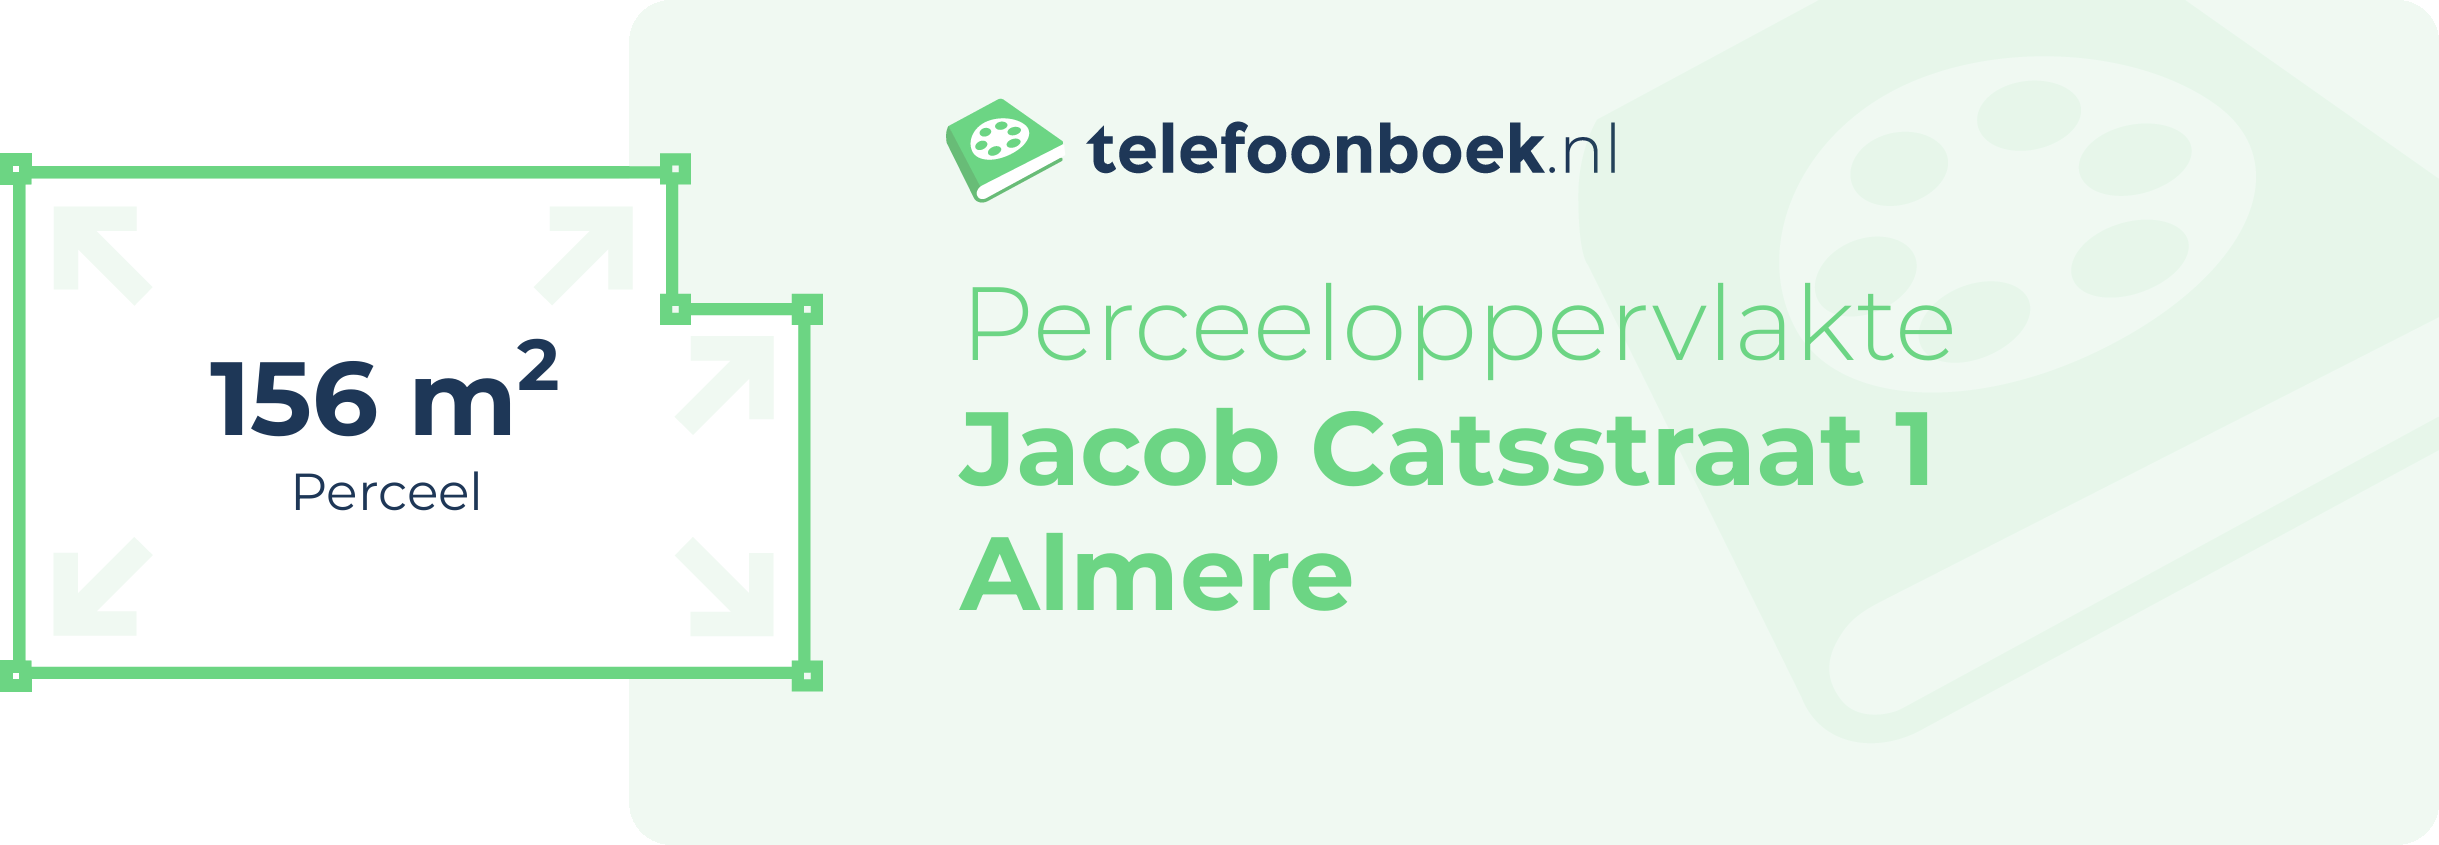 Perceeloppervlakte Jacob Catsstraat 1 Almere